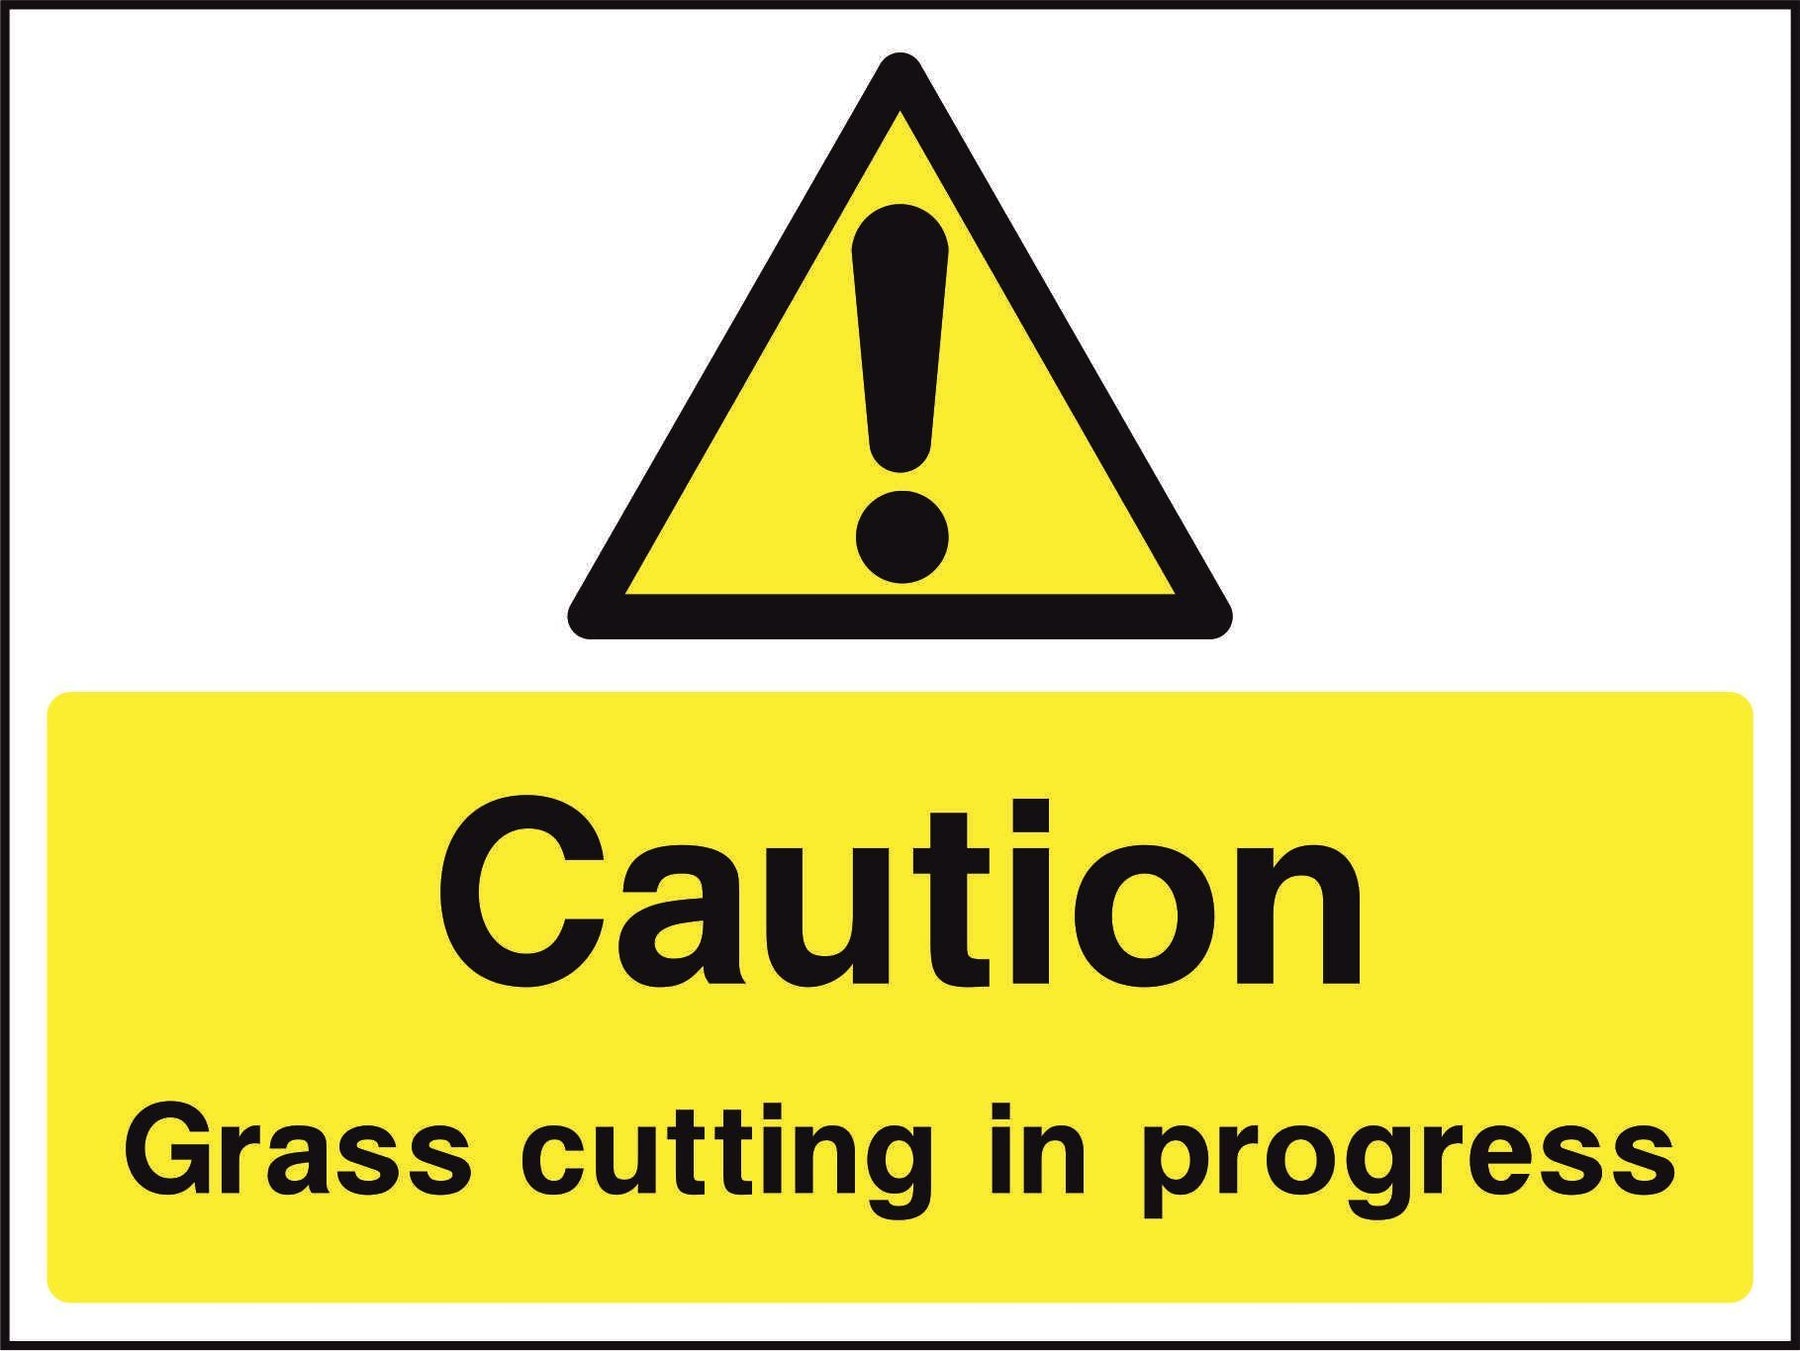 Caution Grass cutting in progress